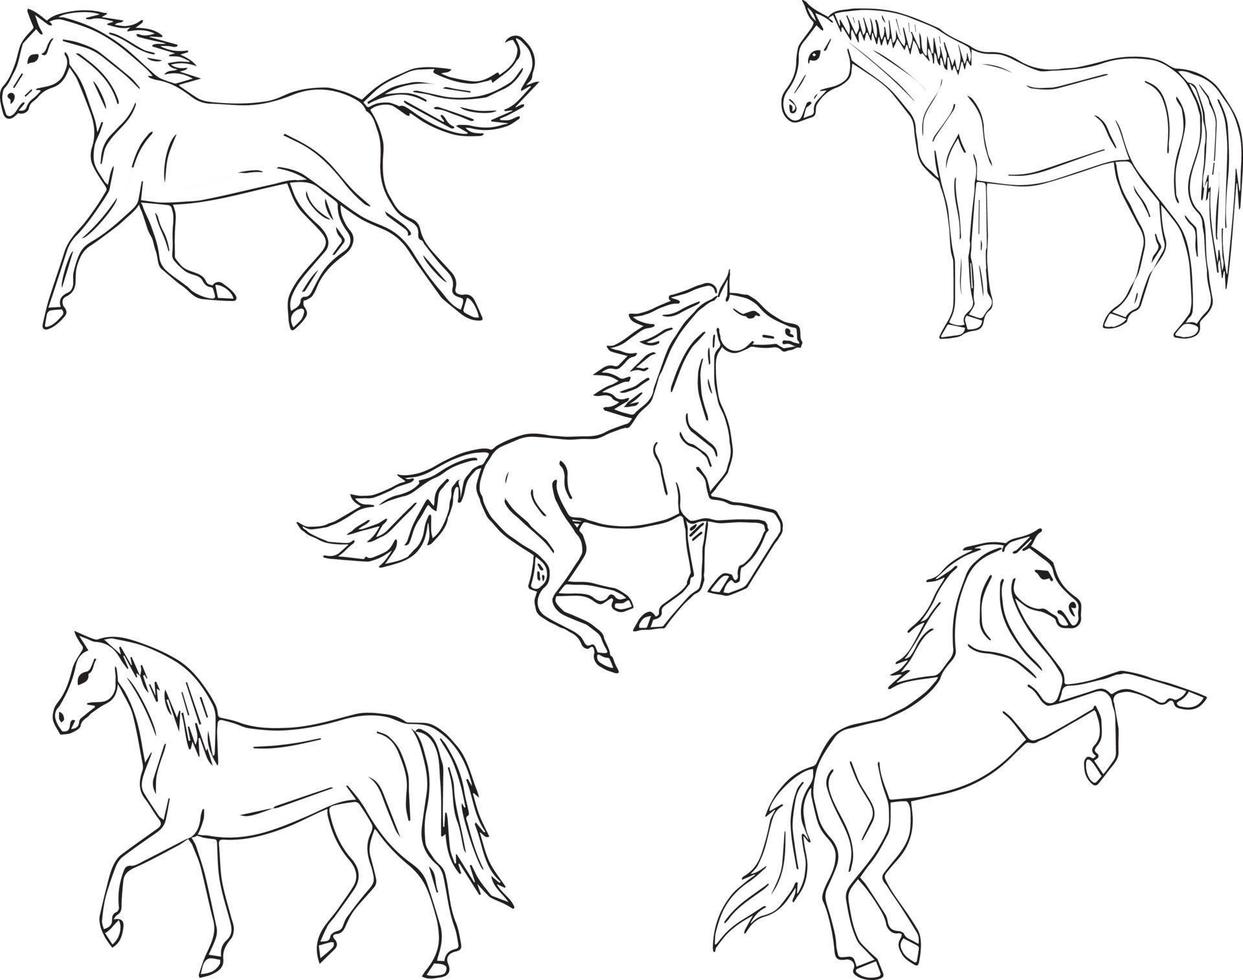 Vector set of hand drawn horse